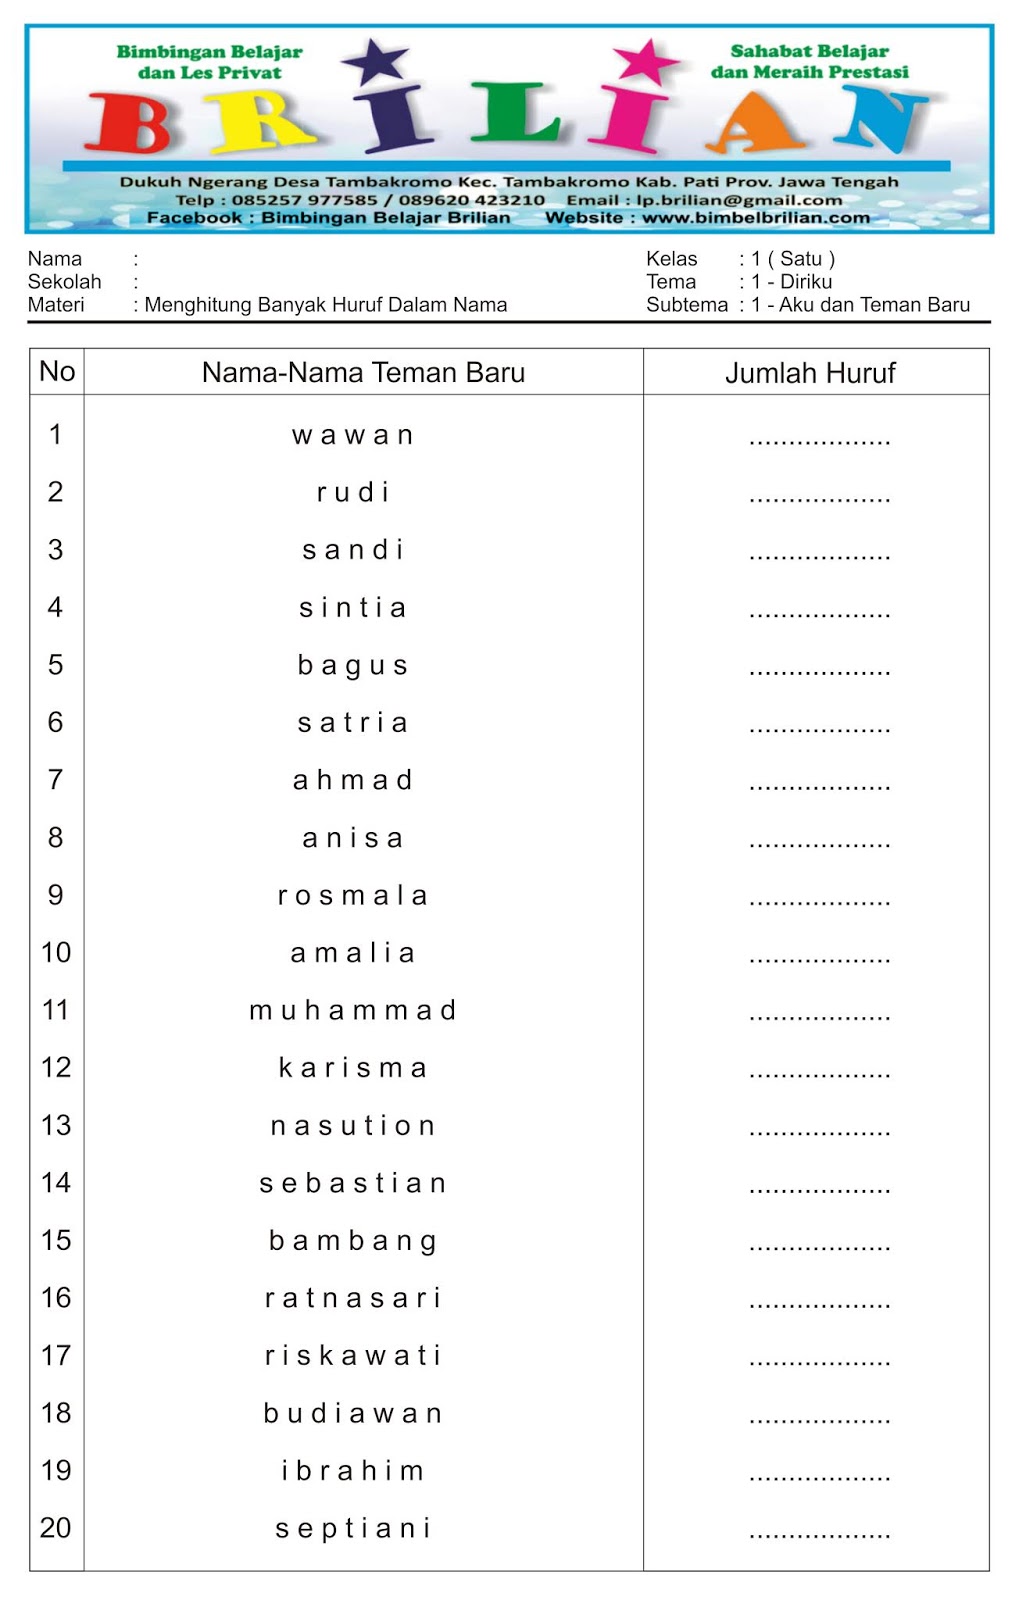 Soal Mengitung Jumlah Abjad Dalam Nama - Kelas 1 Sd Tema 1 Diriku